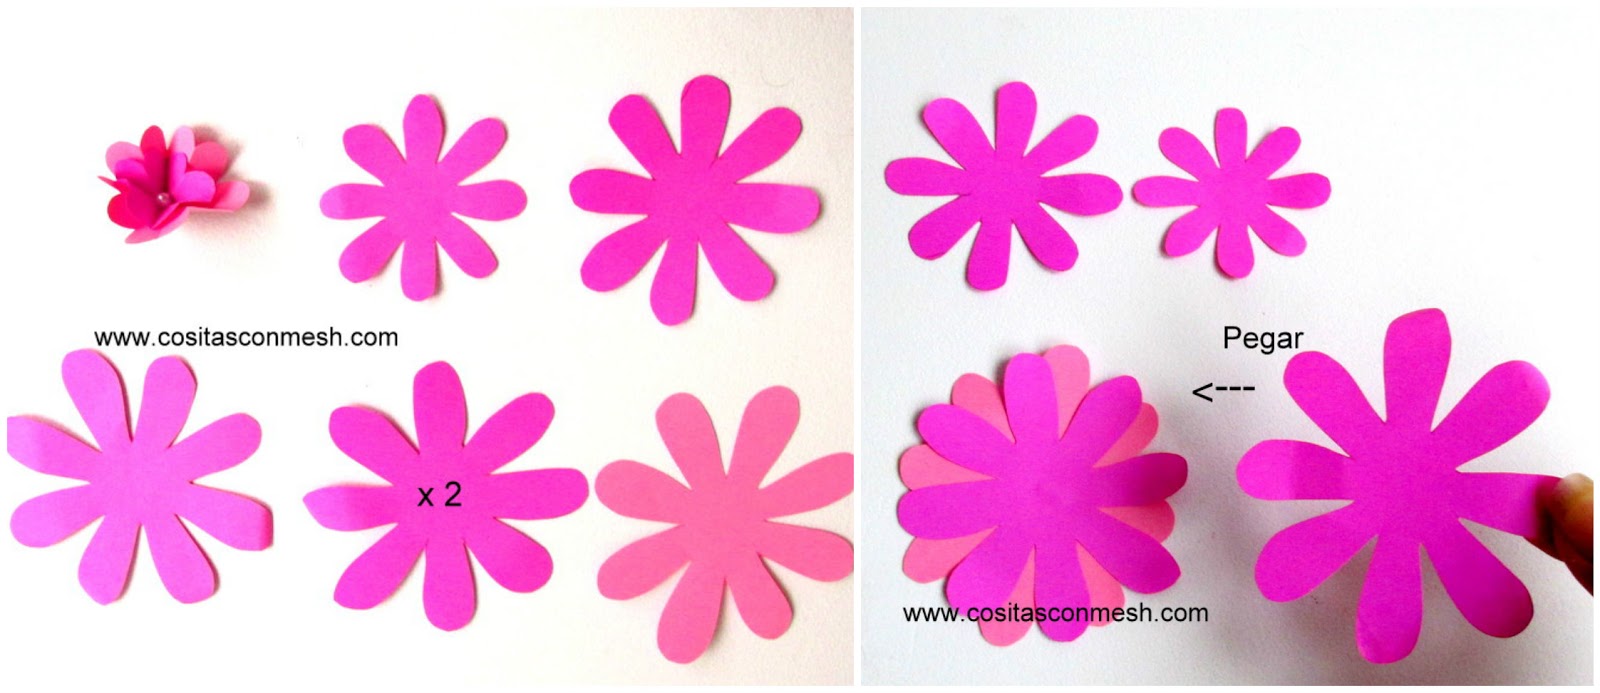 2 Ideas para hacer flores de papel para regalos ~ cositasconmesh